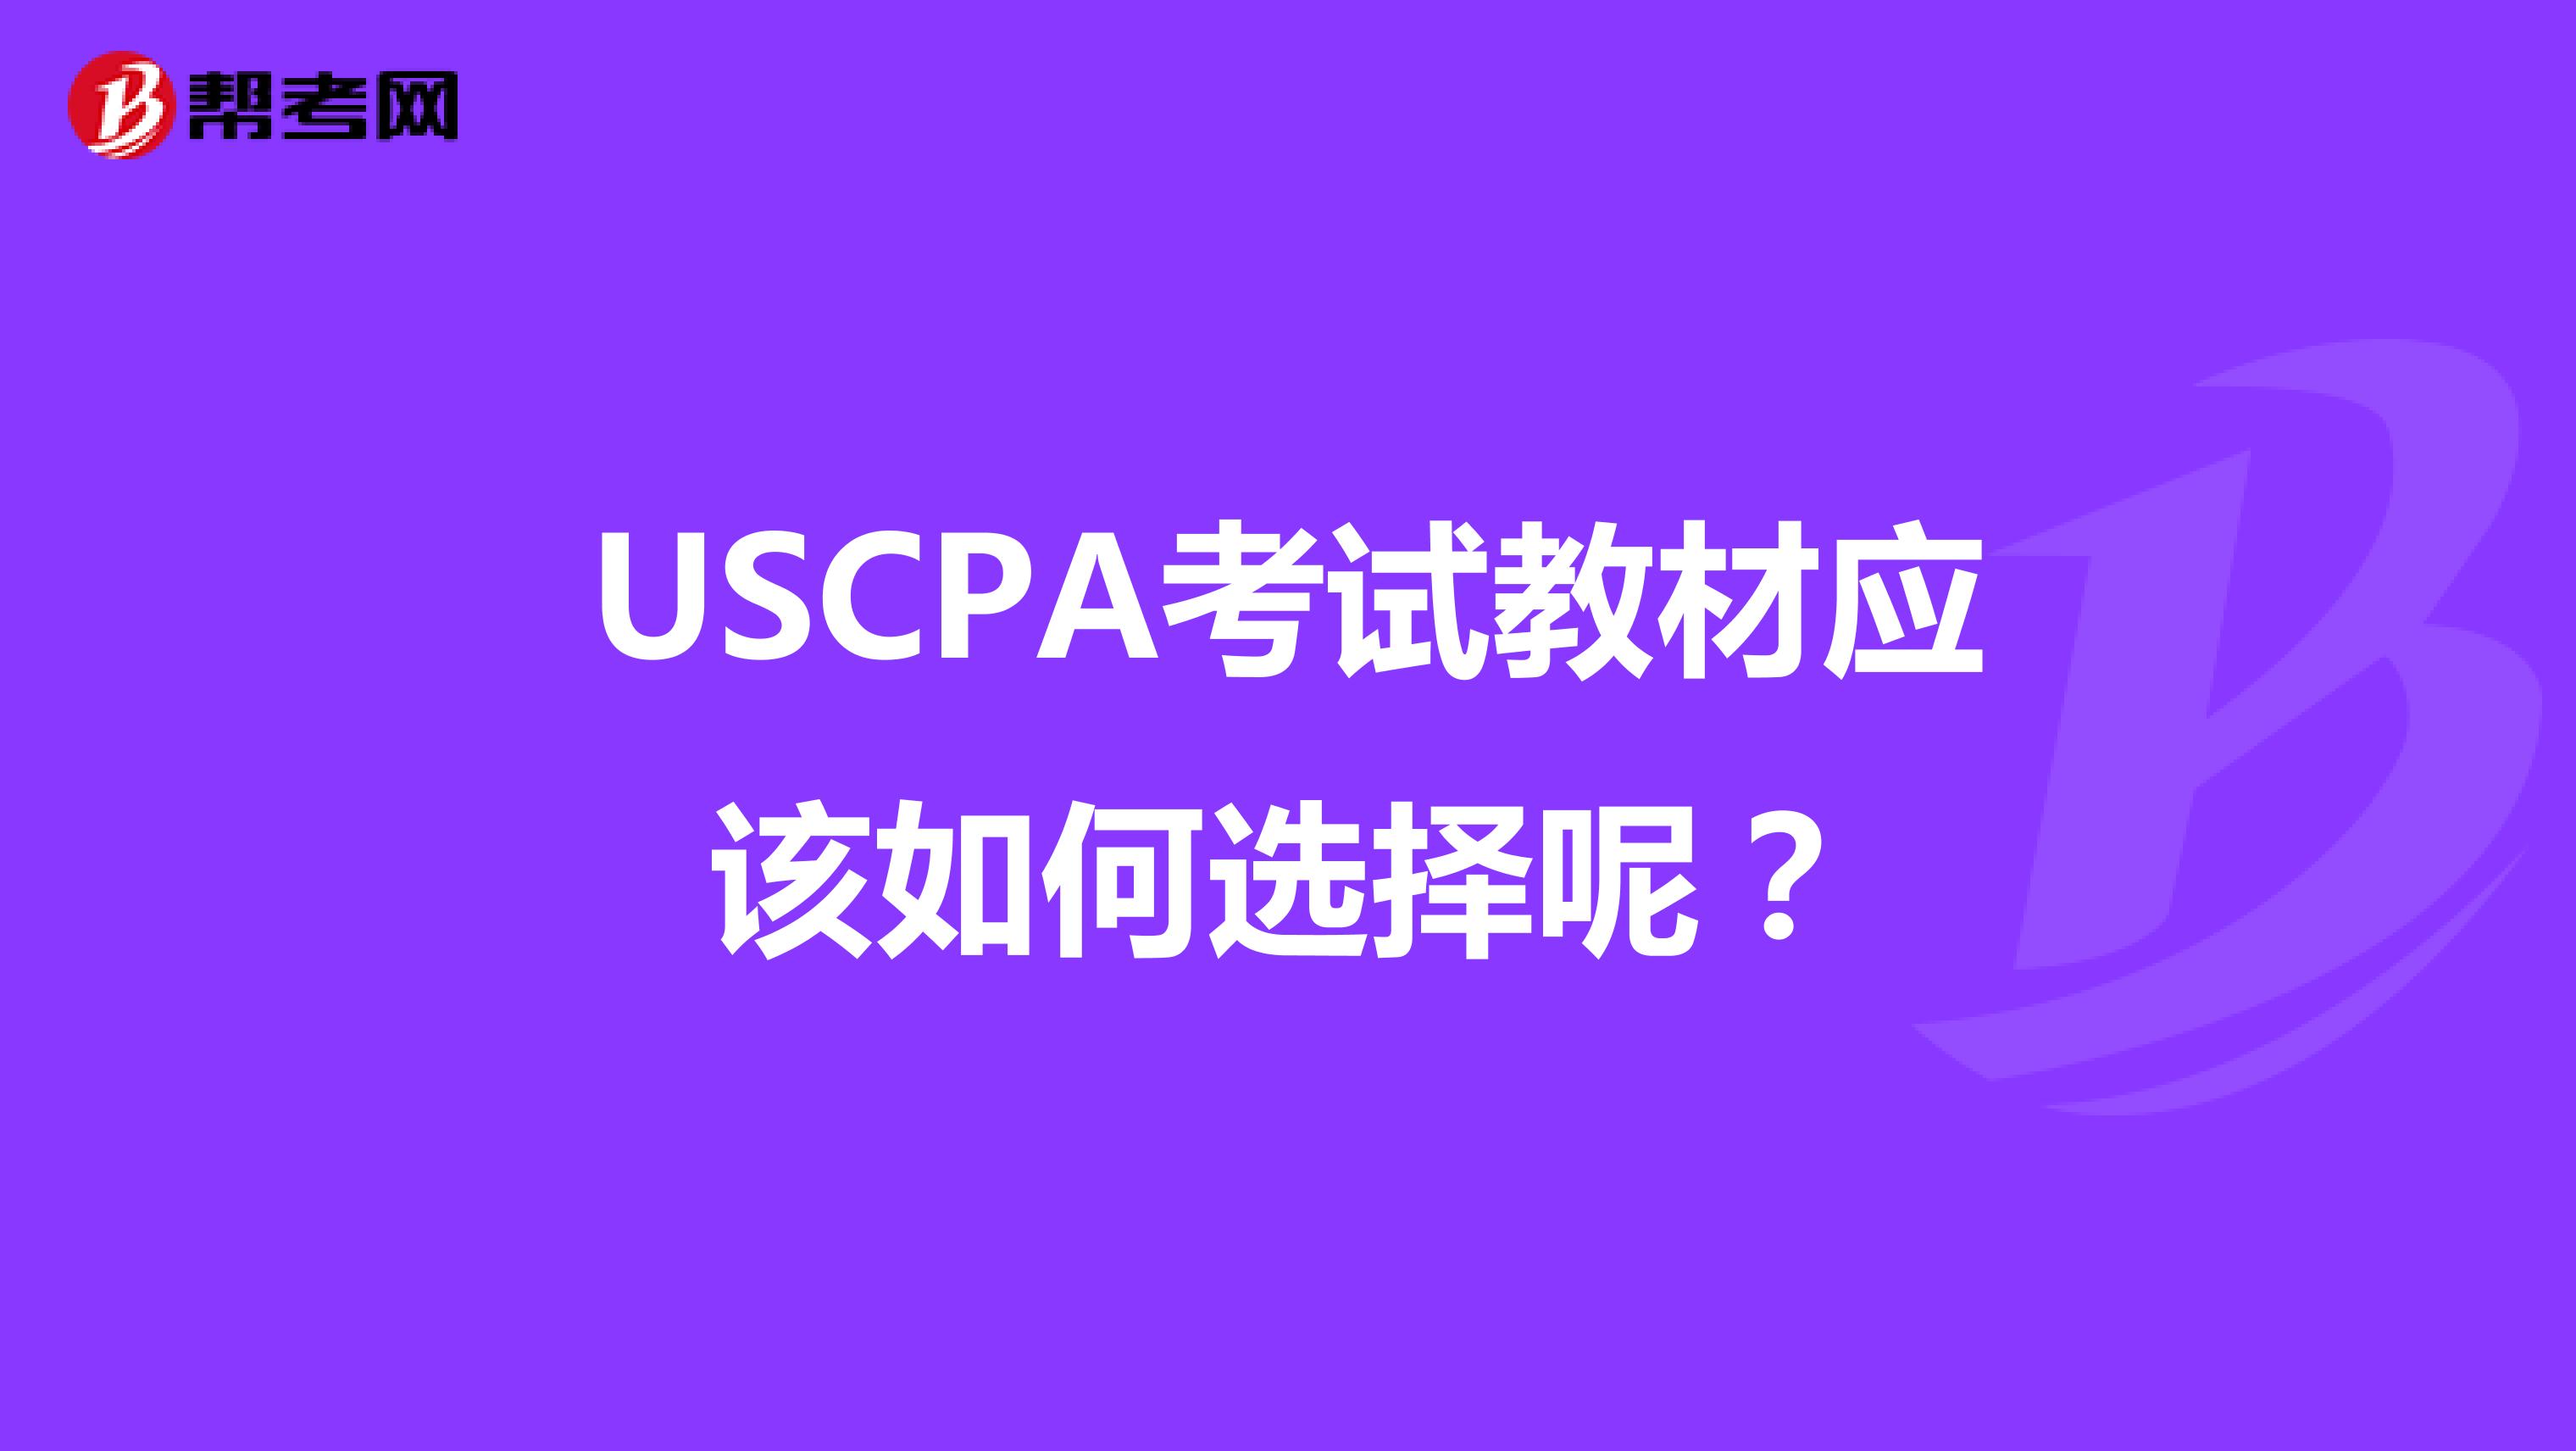 USCPA考试教材应该如何选择呢？